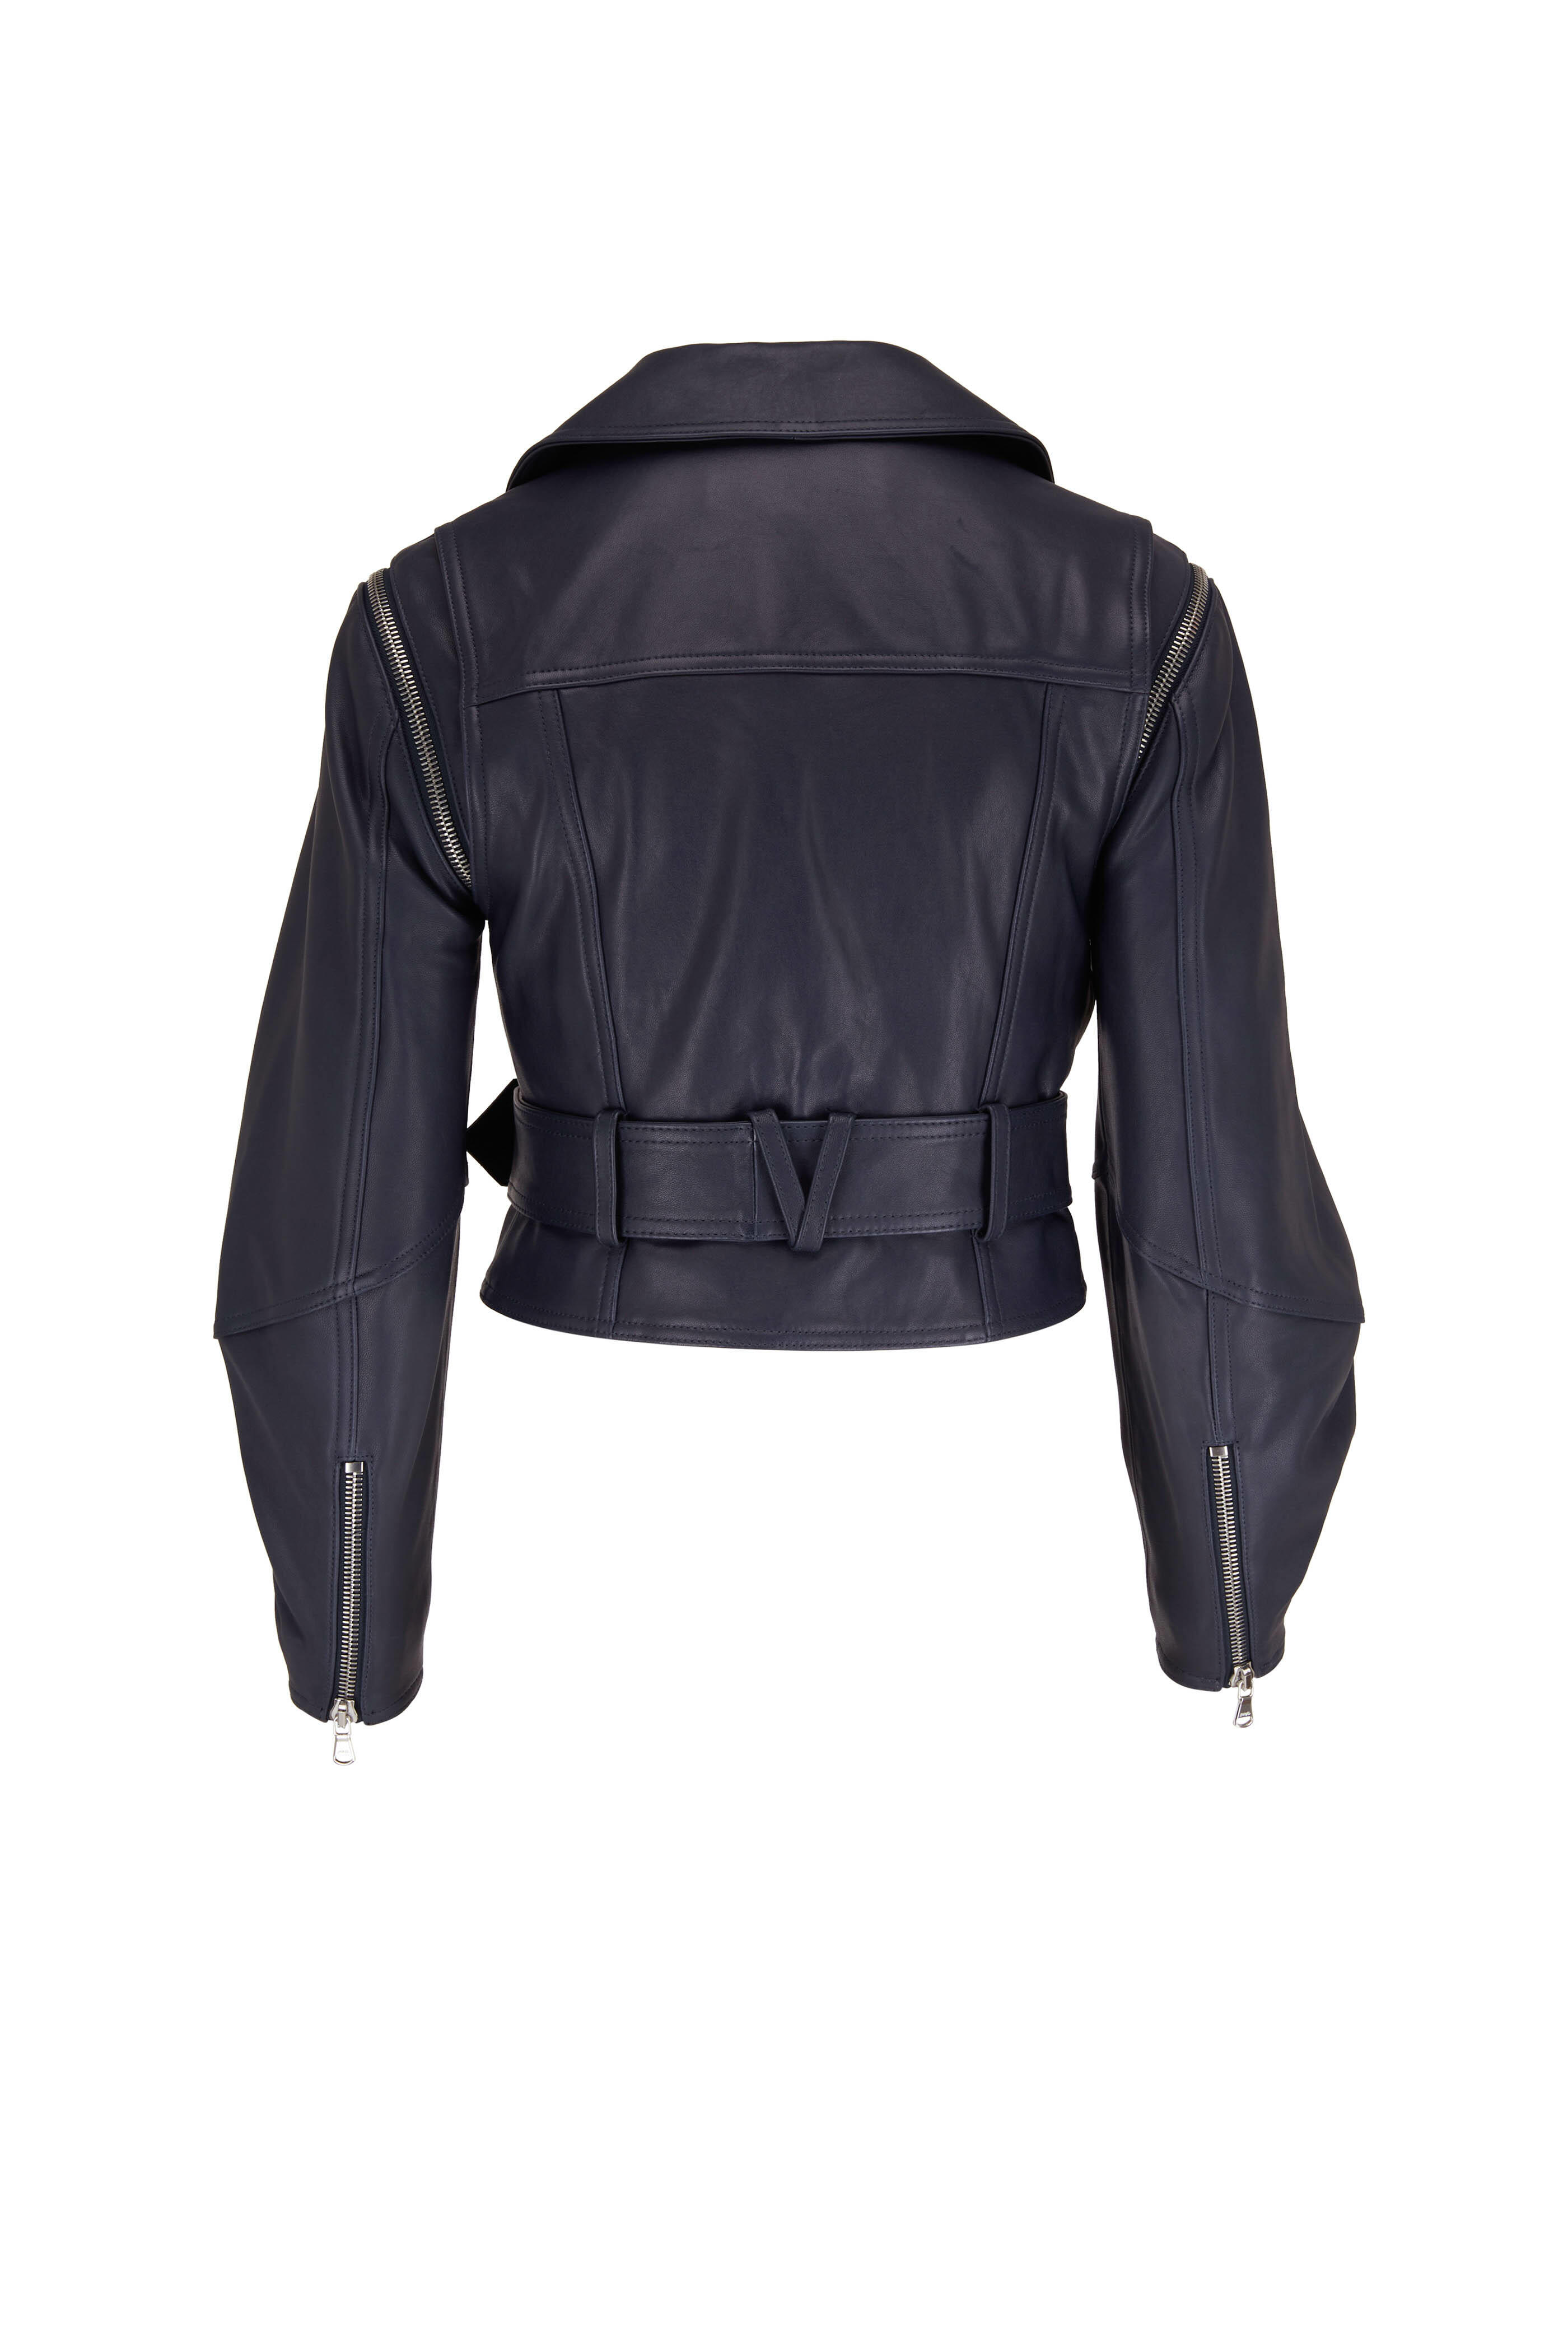 Veronica Beard - Jylan Navy Leather Convertible Moto Jacket